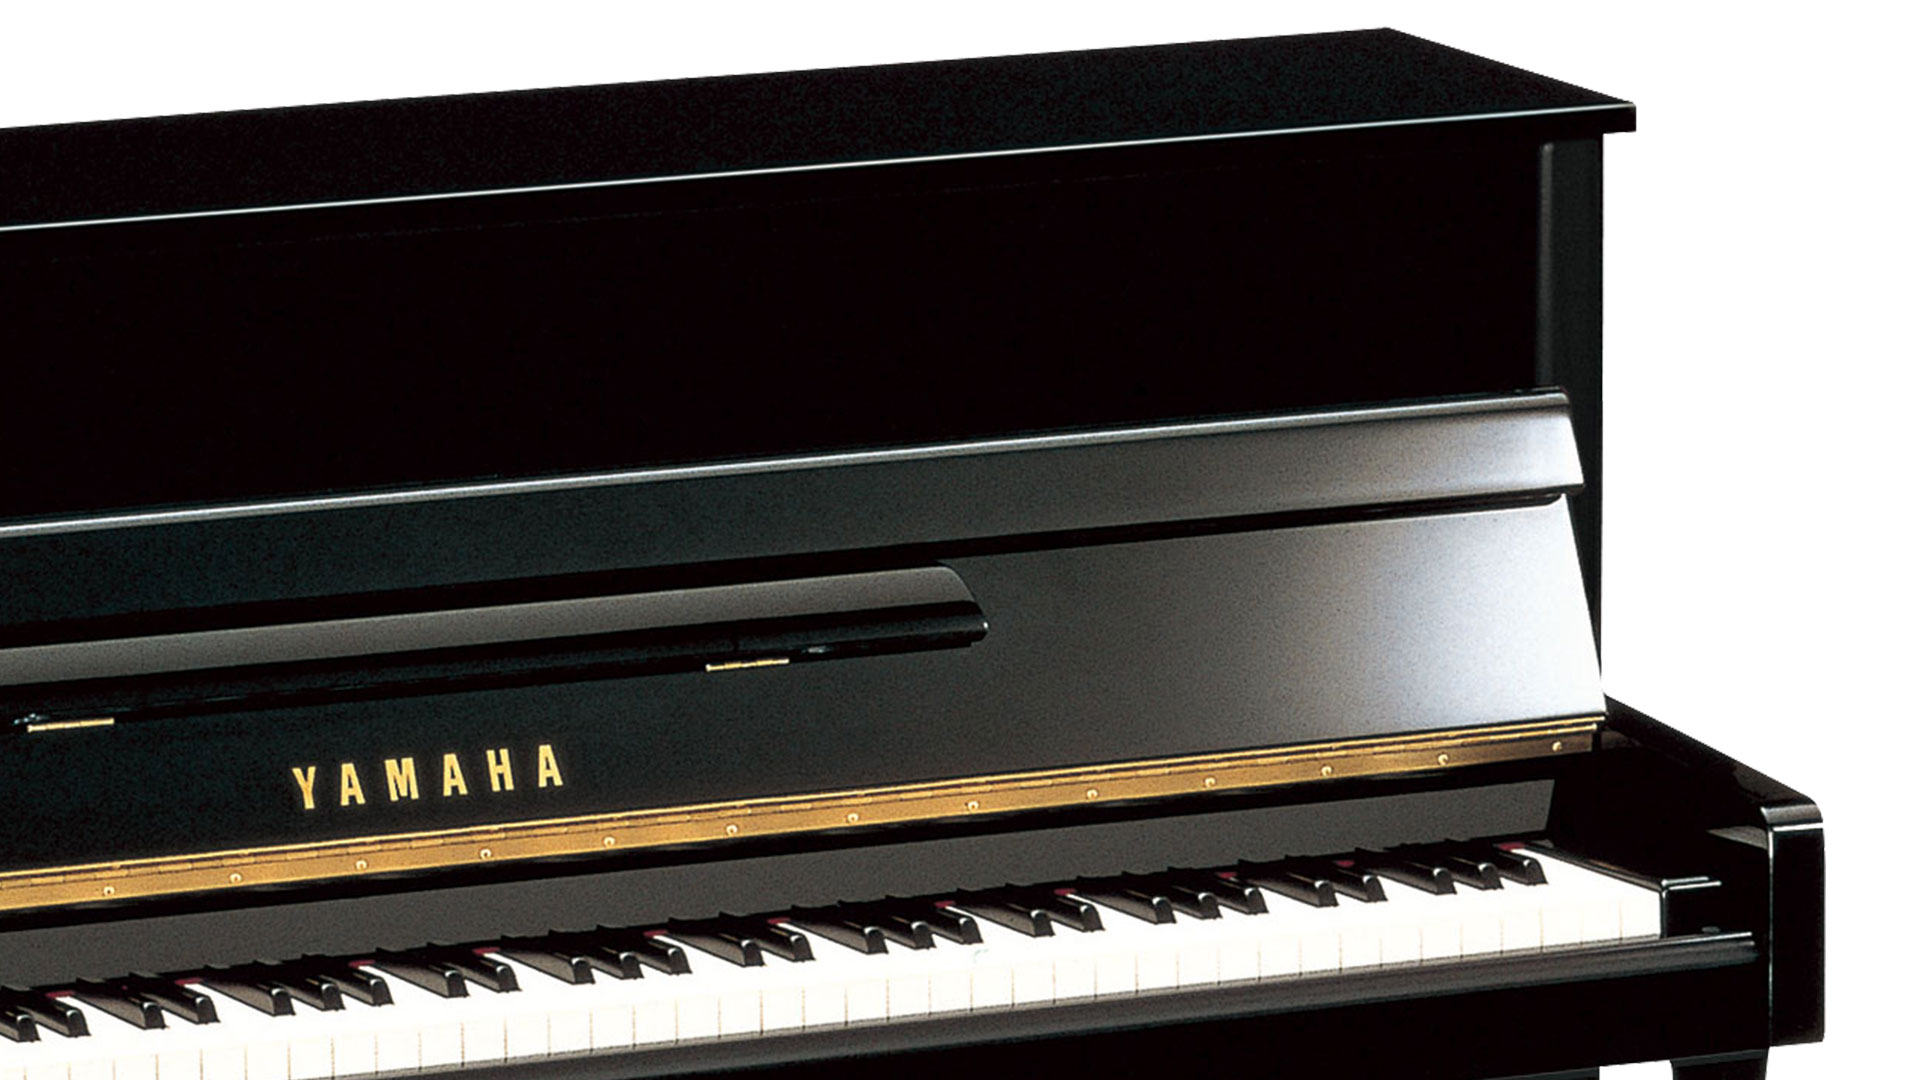 Yamaha piano Model b2